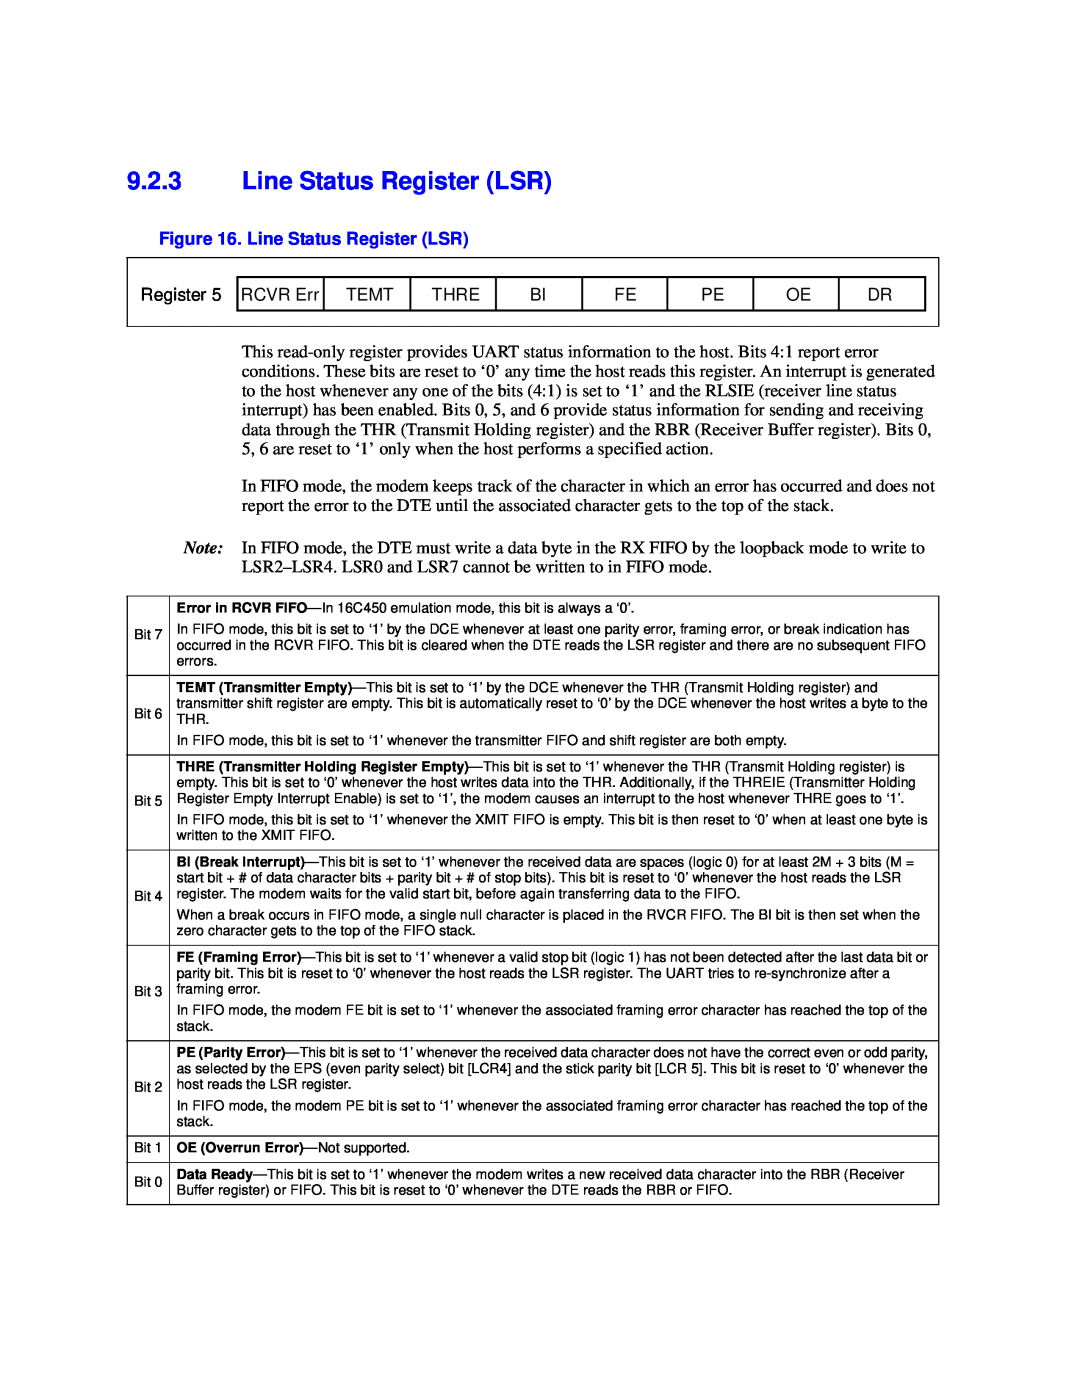 Intel 537EX manual 9.2.3Line Status Register LSR 